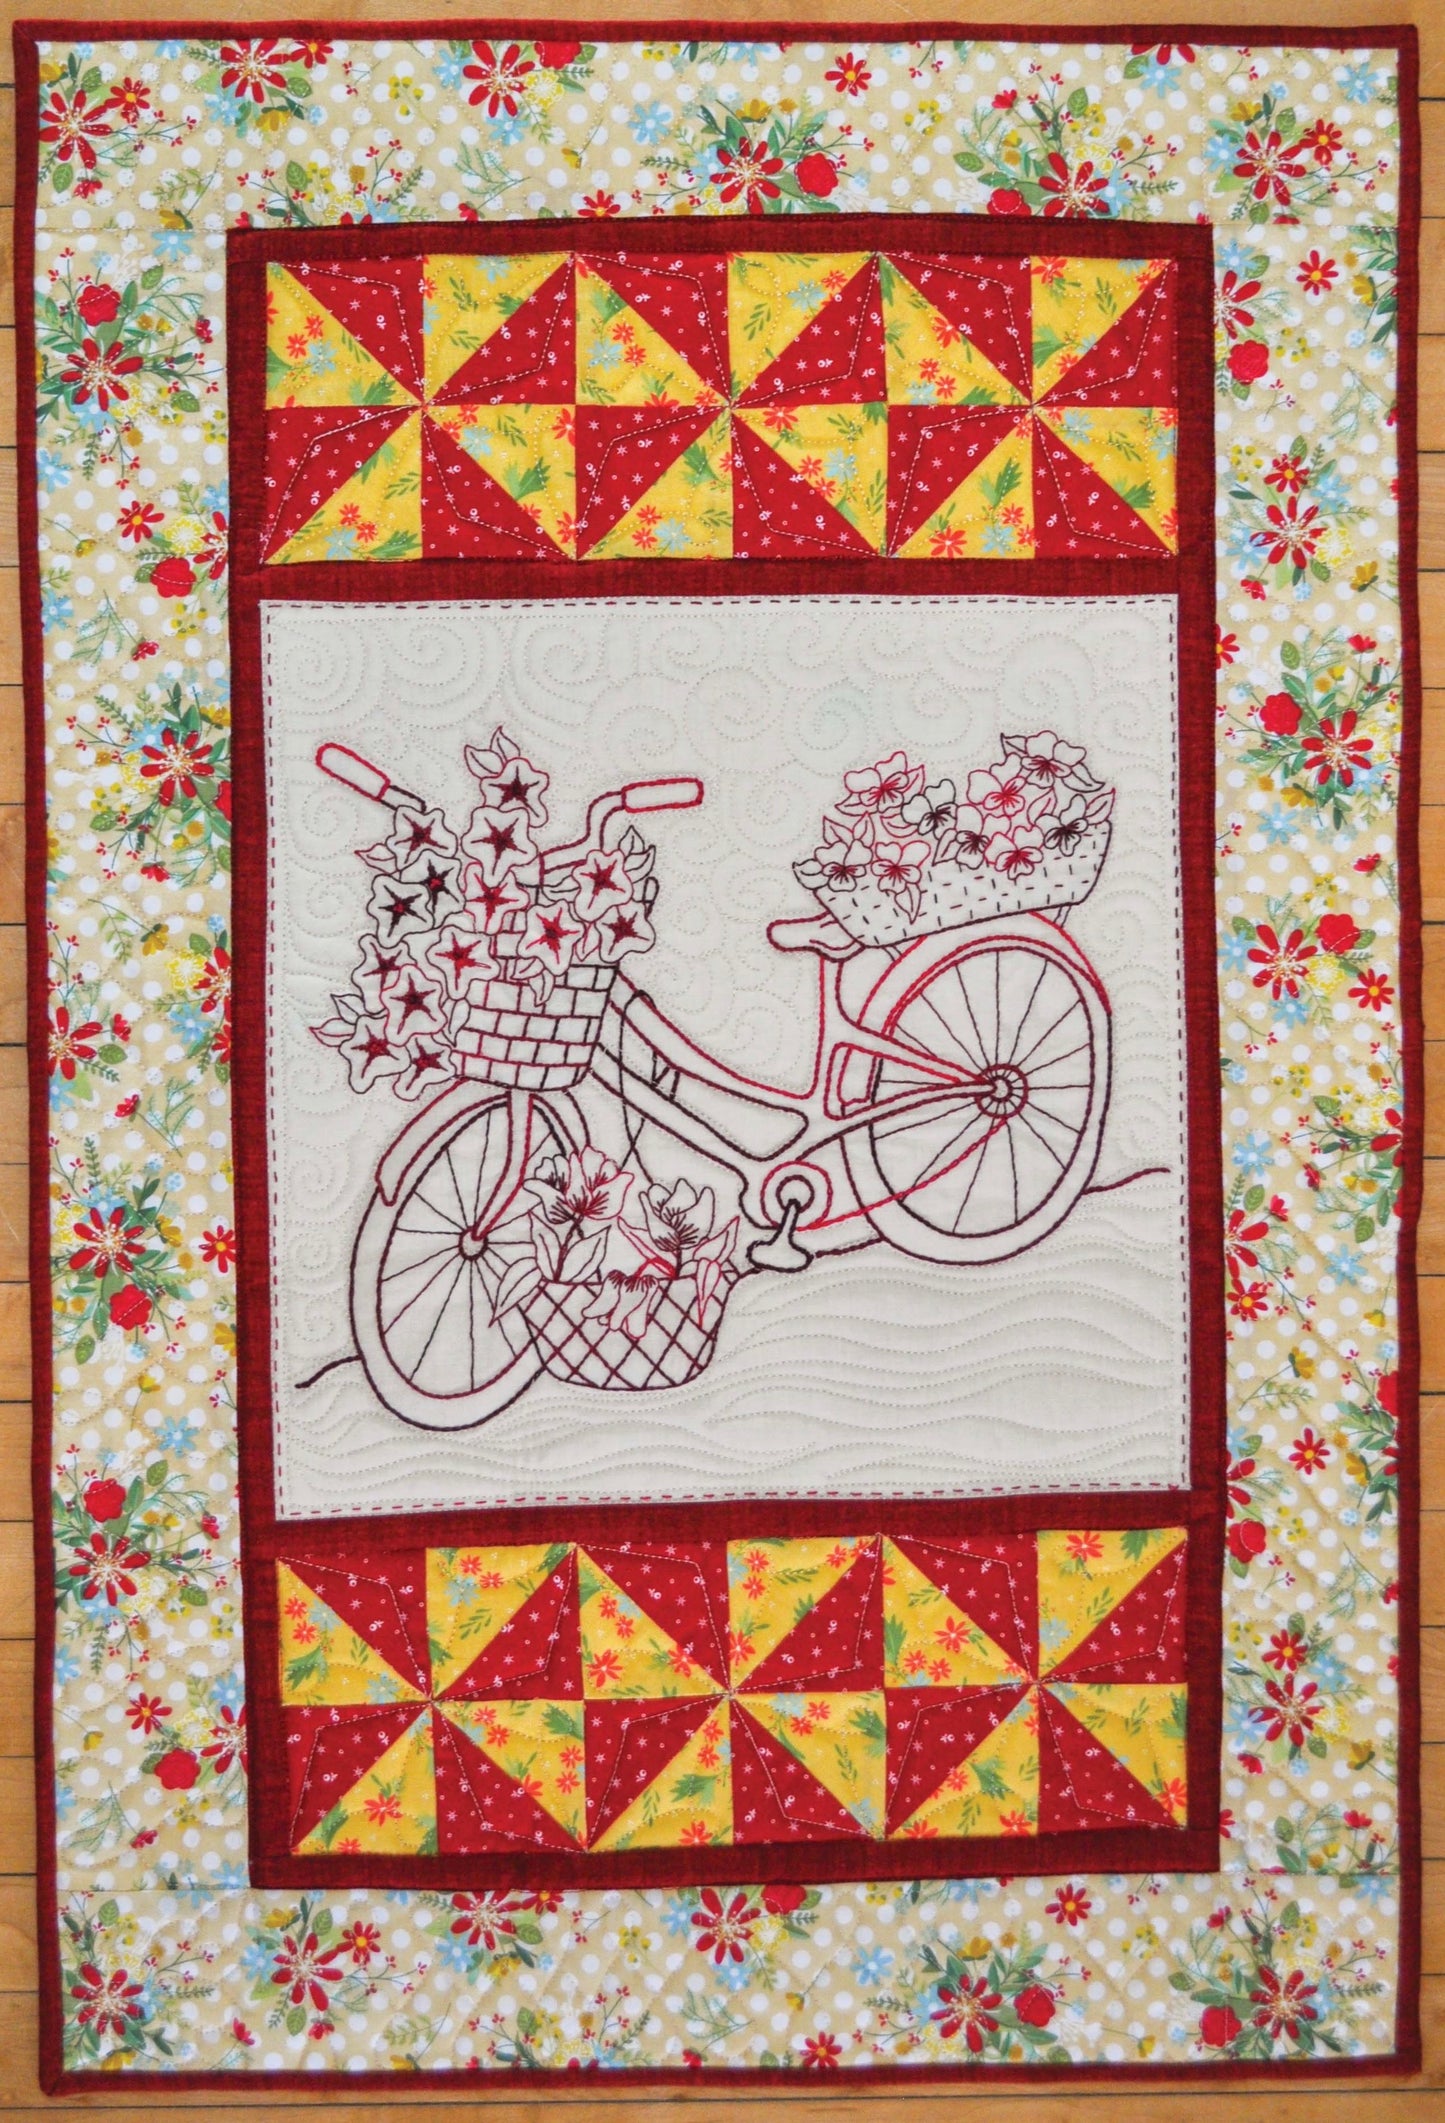 Pattern #121 - Bicycle Blooms